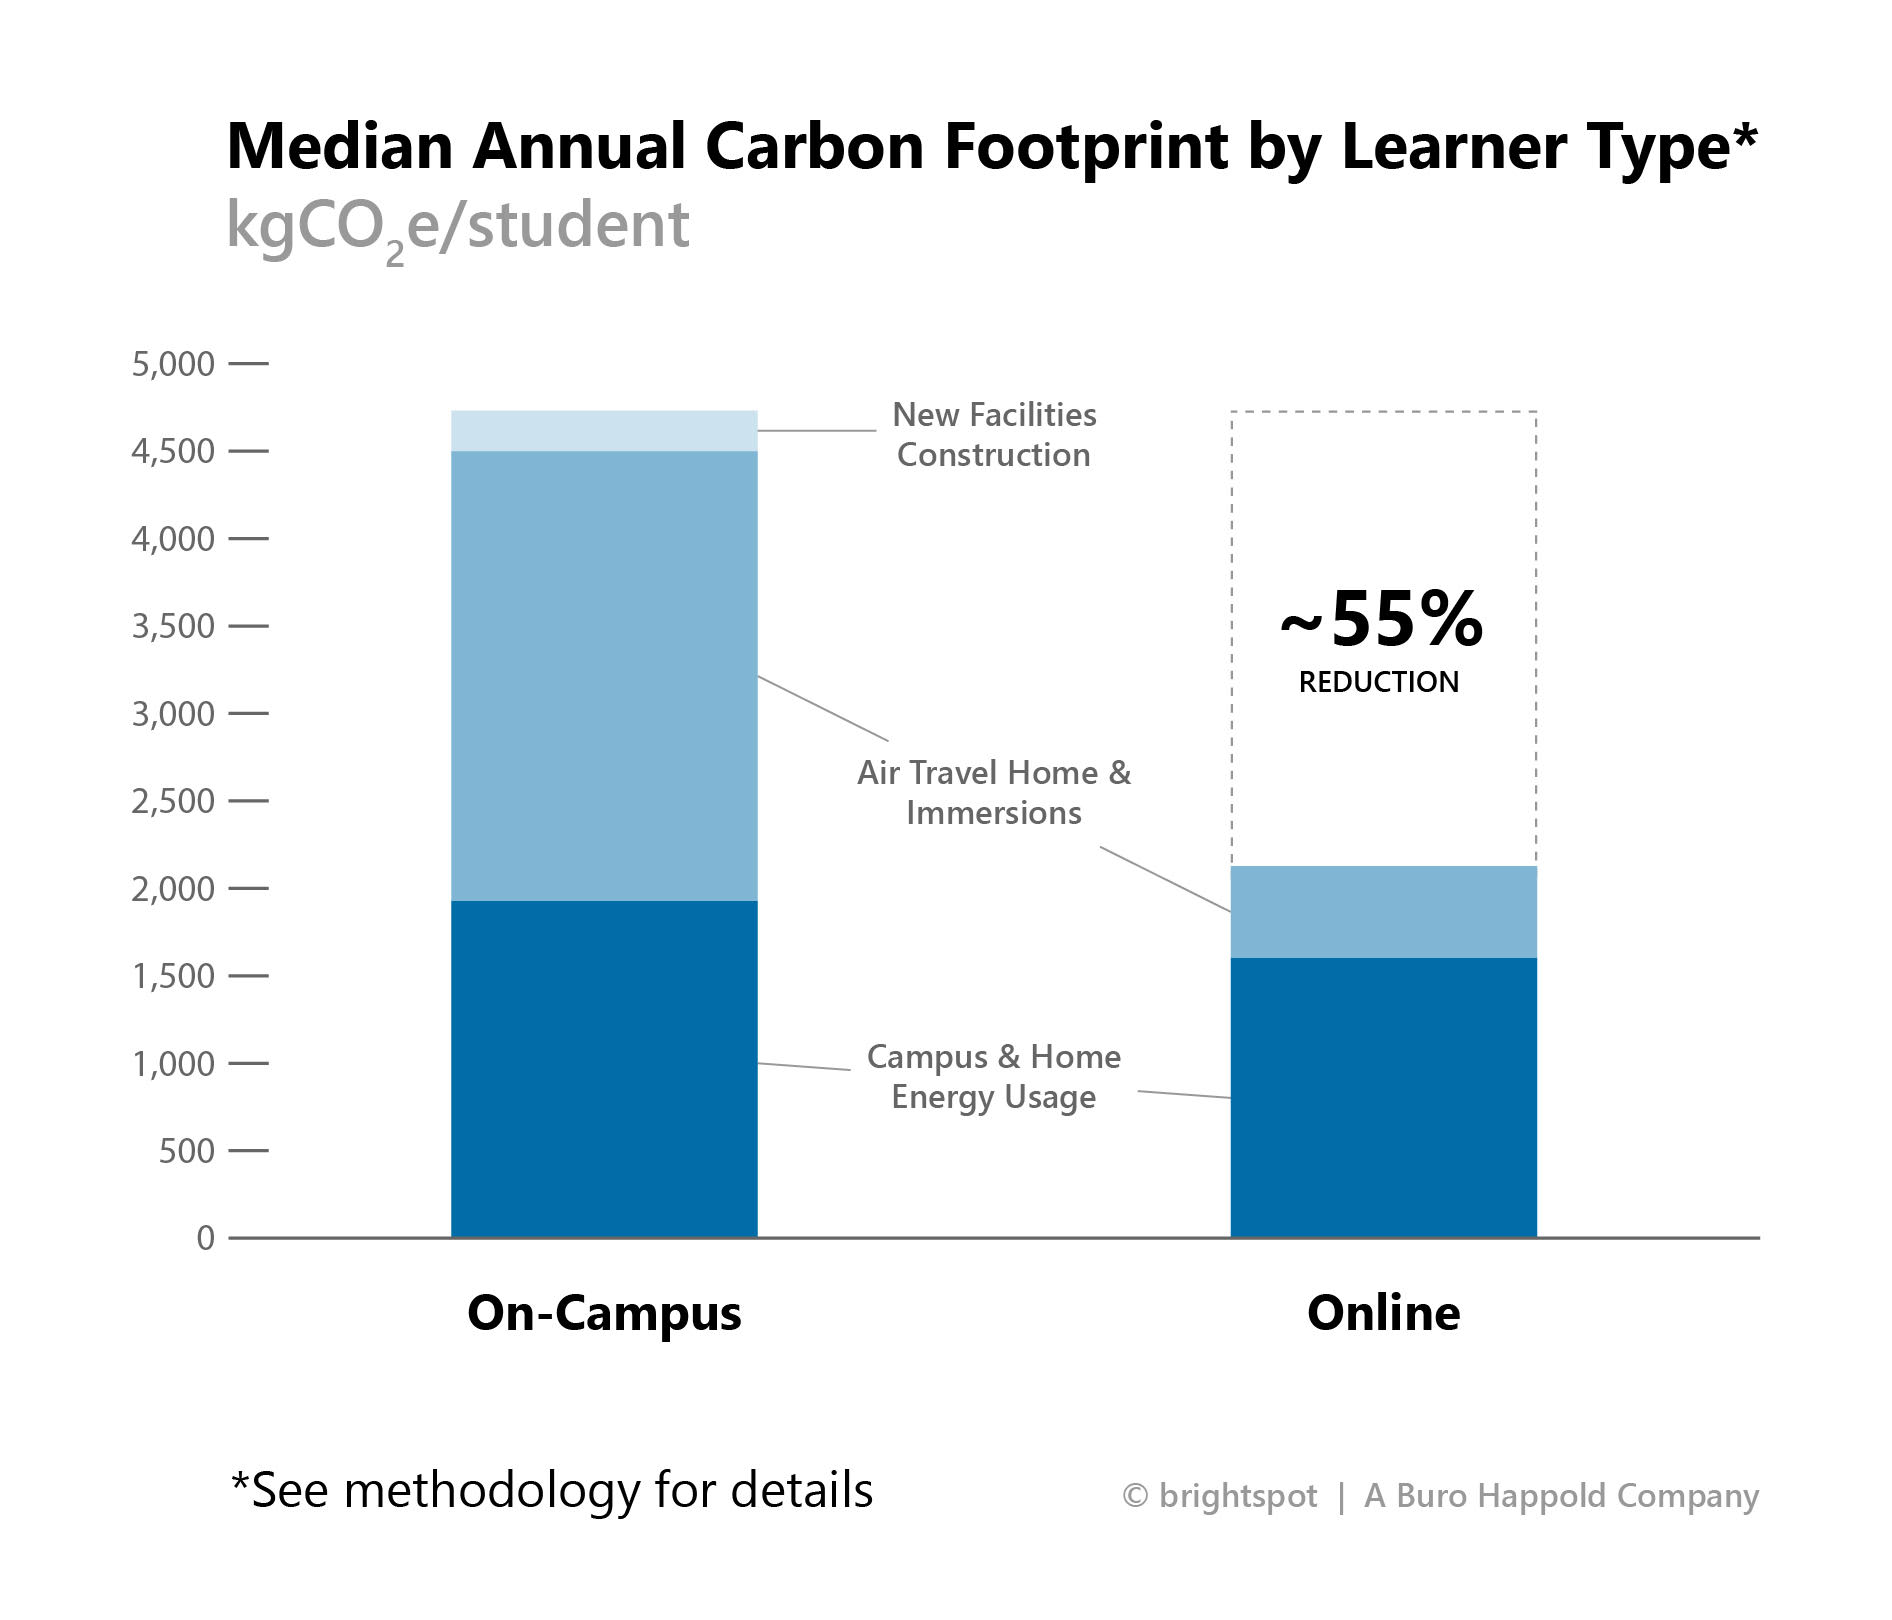 Median Carbon Footprint by Learner Type